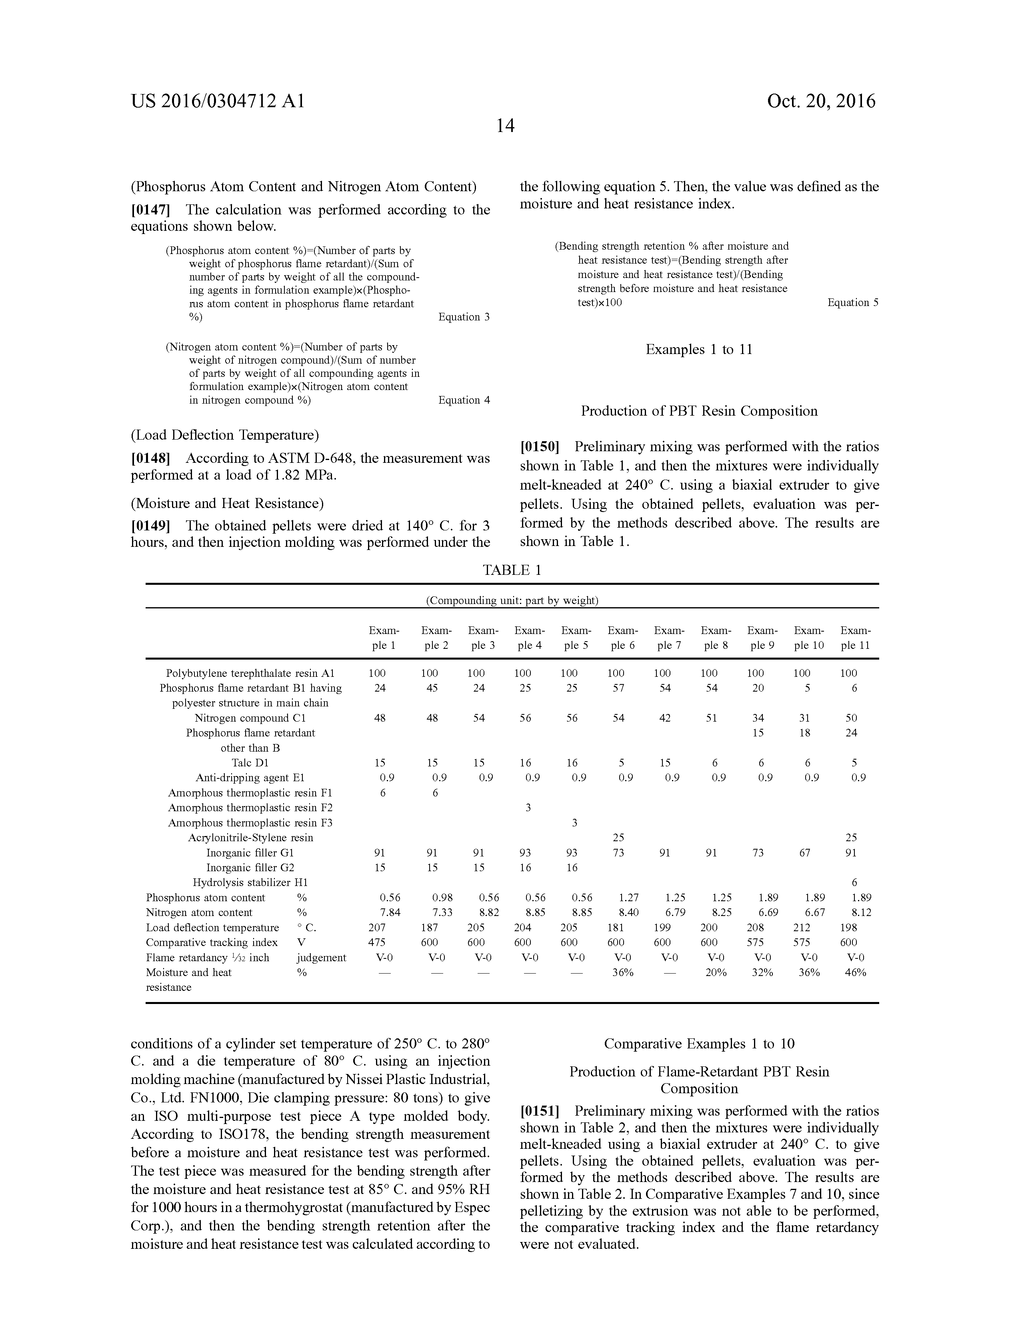 FLAME-RETARDANT POLYBUTYLENE TEREPHTHALATE RESIN COMPOSITION - diagram, schematic, and image 15